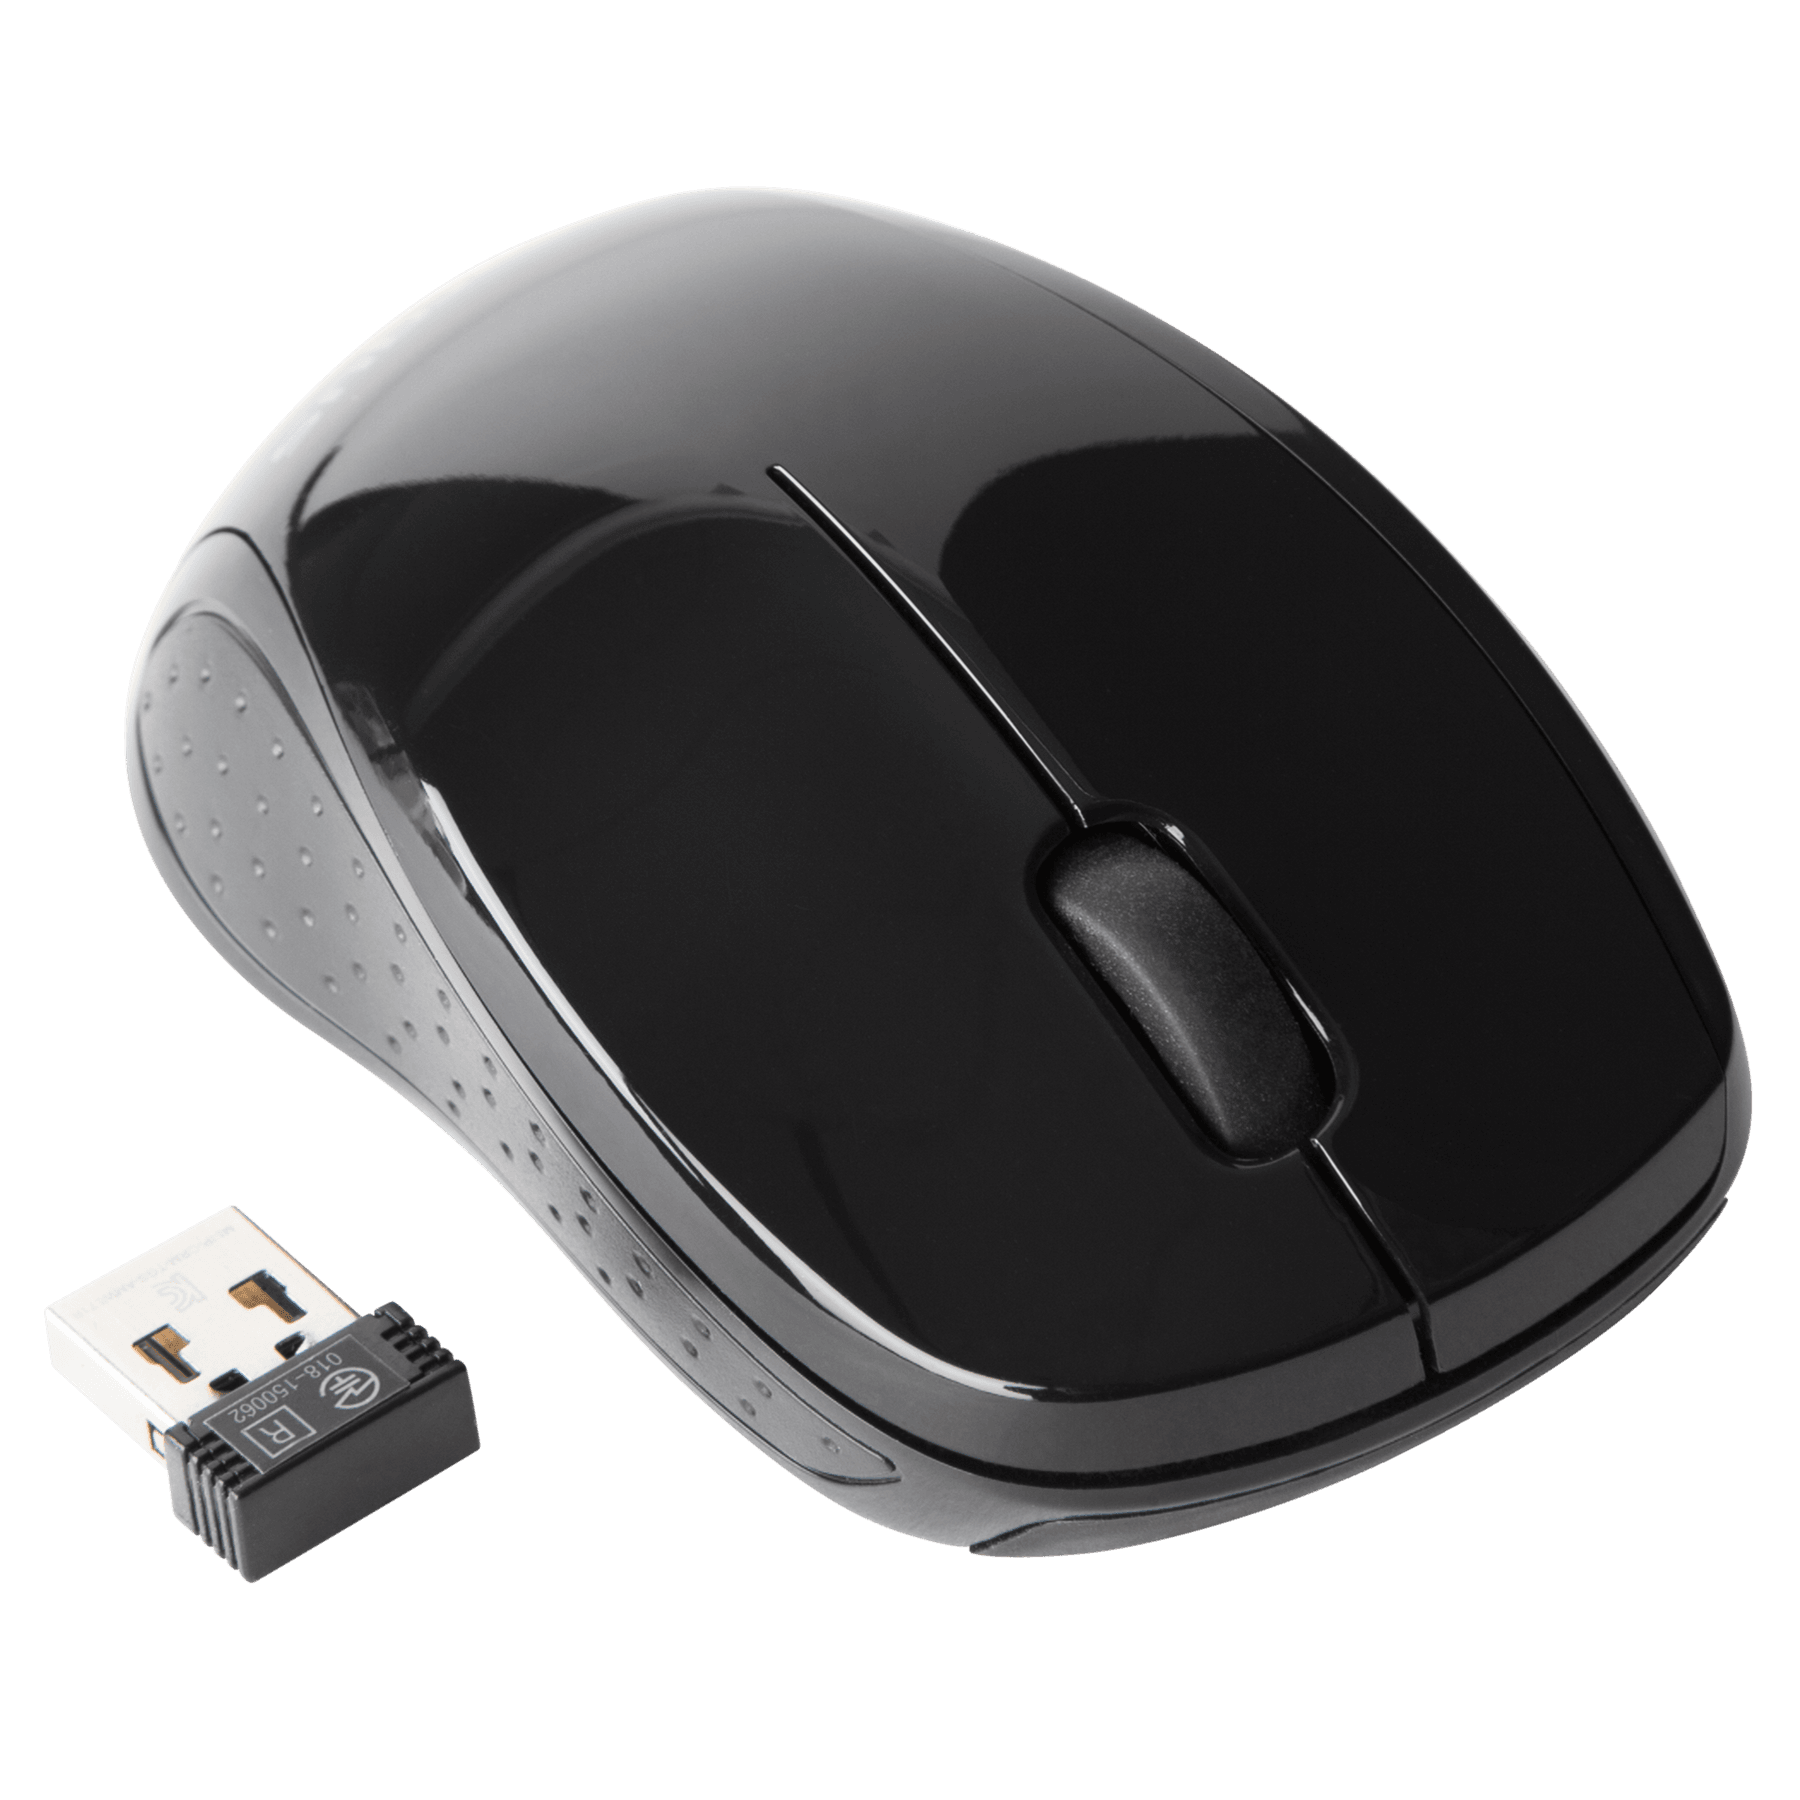 Мышь беспроводная dell Wireless Mouse 220, черный. Мышь Logitech Wireless Mouse m560 White USB. Logitech m175 мышь беспроводная. Мышь Logitech m171 Blue Optical Mouse Wireless (910-004640) USB. Беспроводная мышь f1